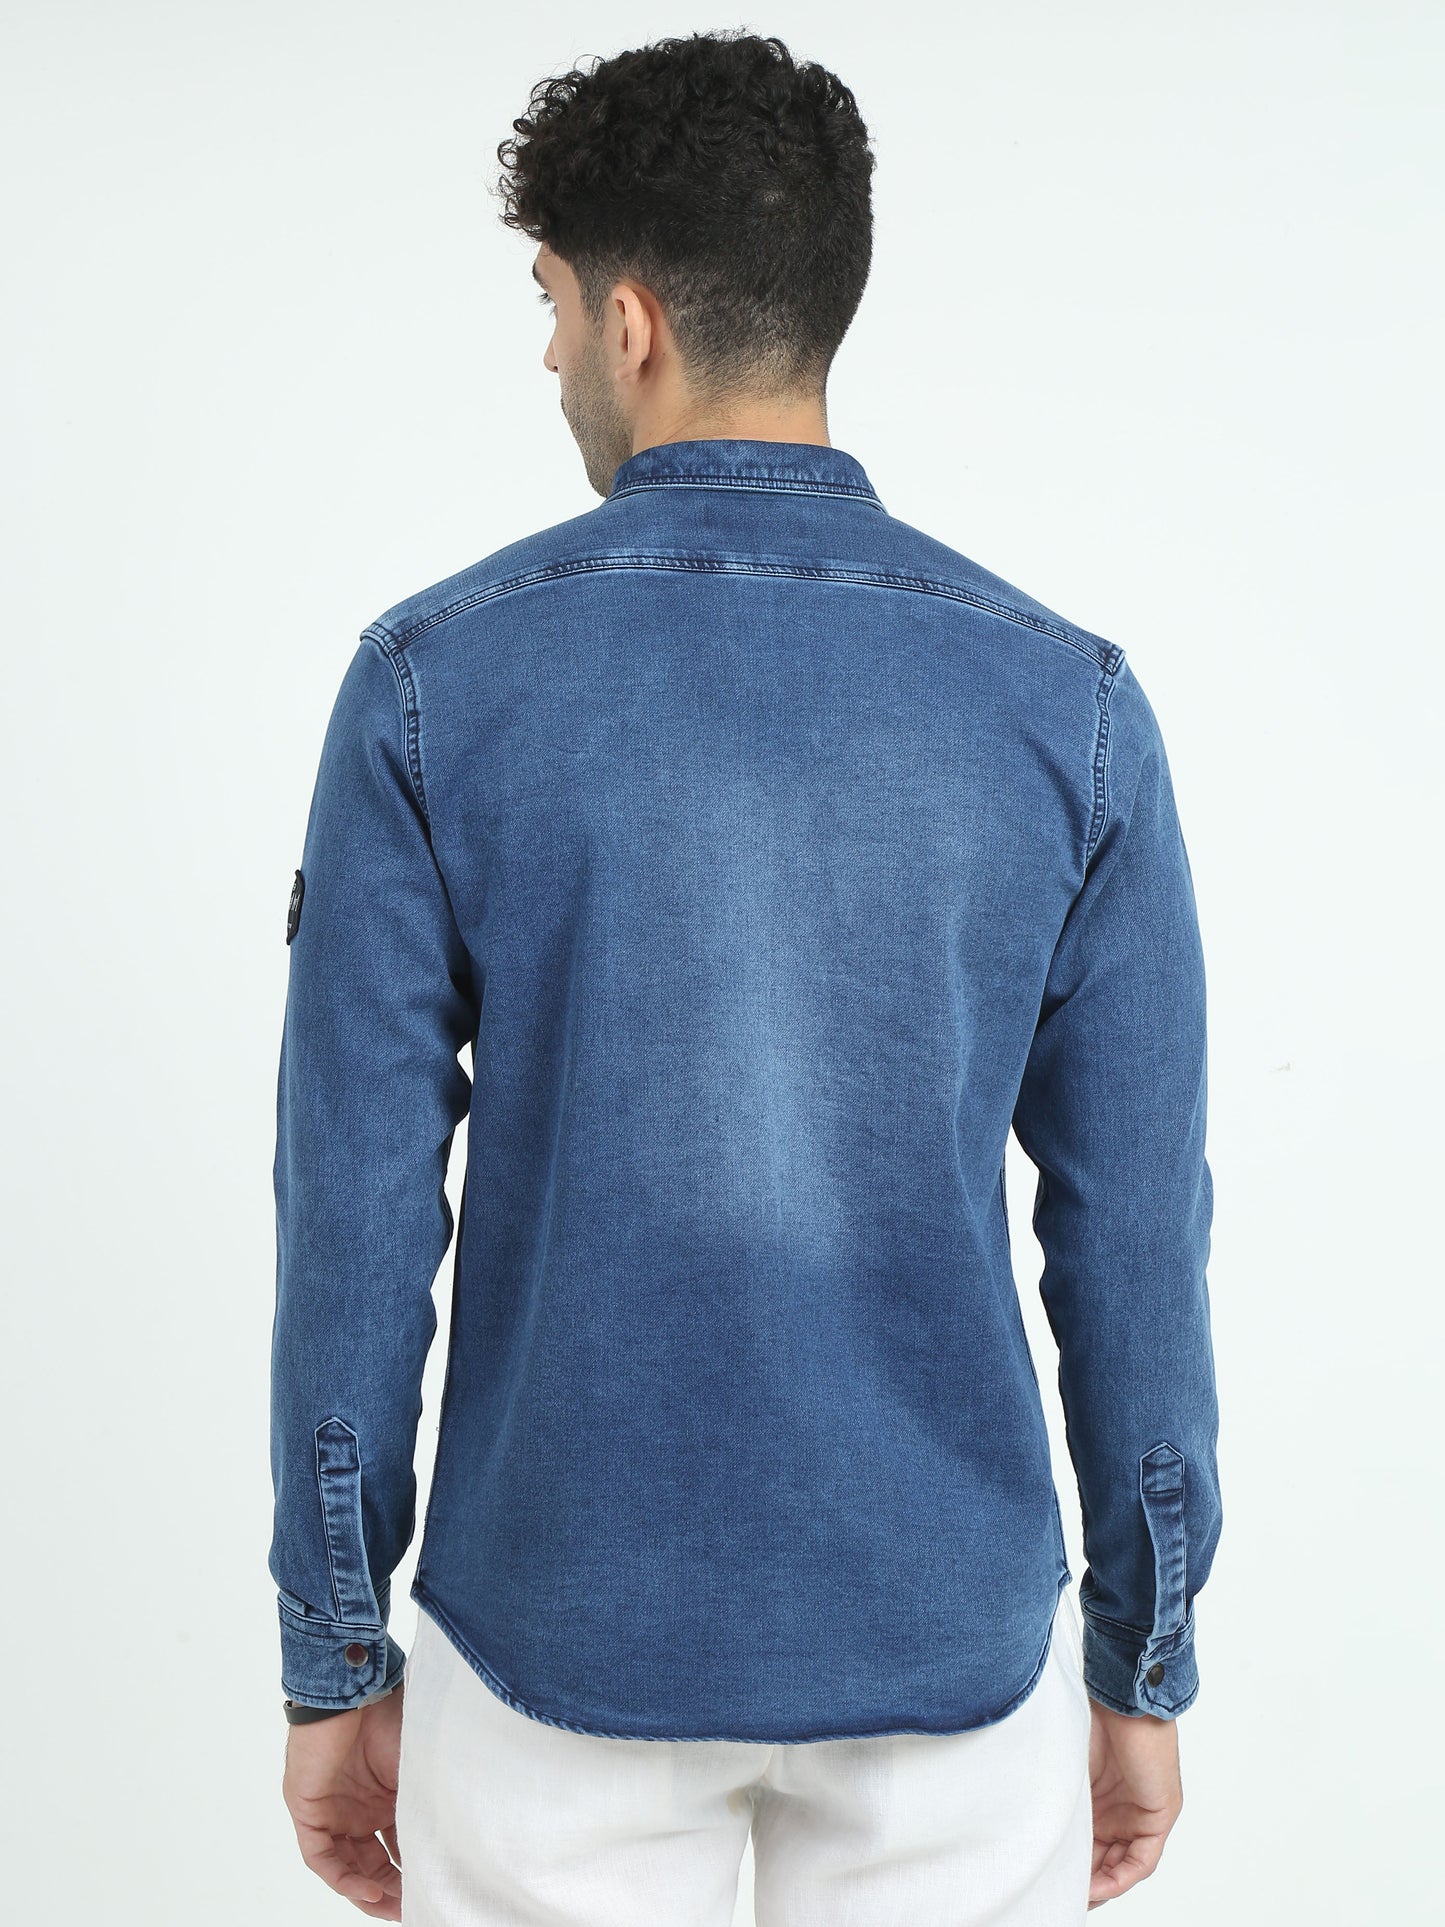 Air force blue double pocket denim shirt for men